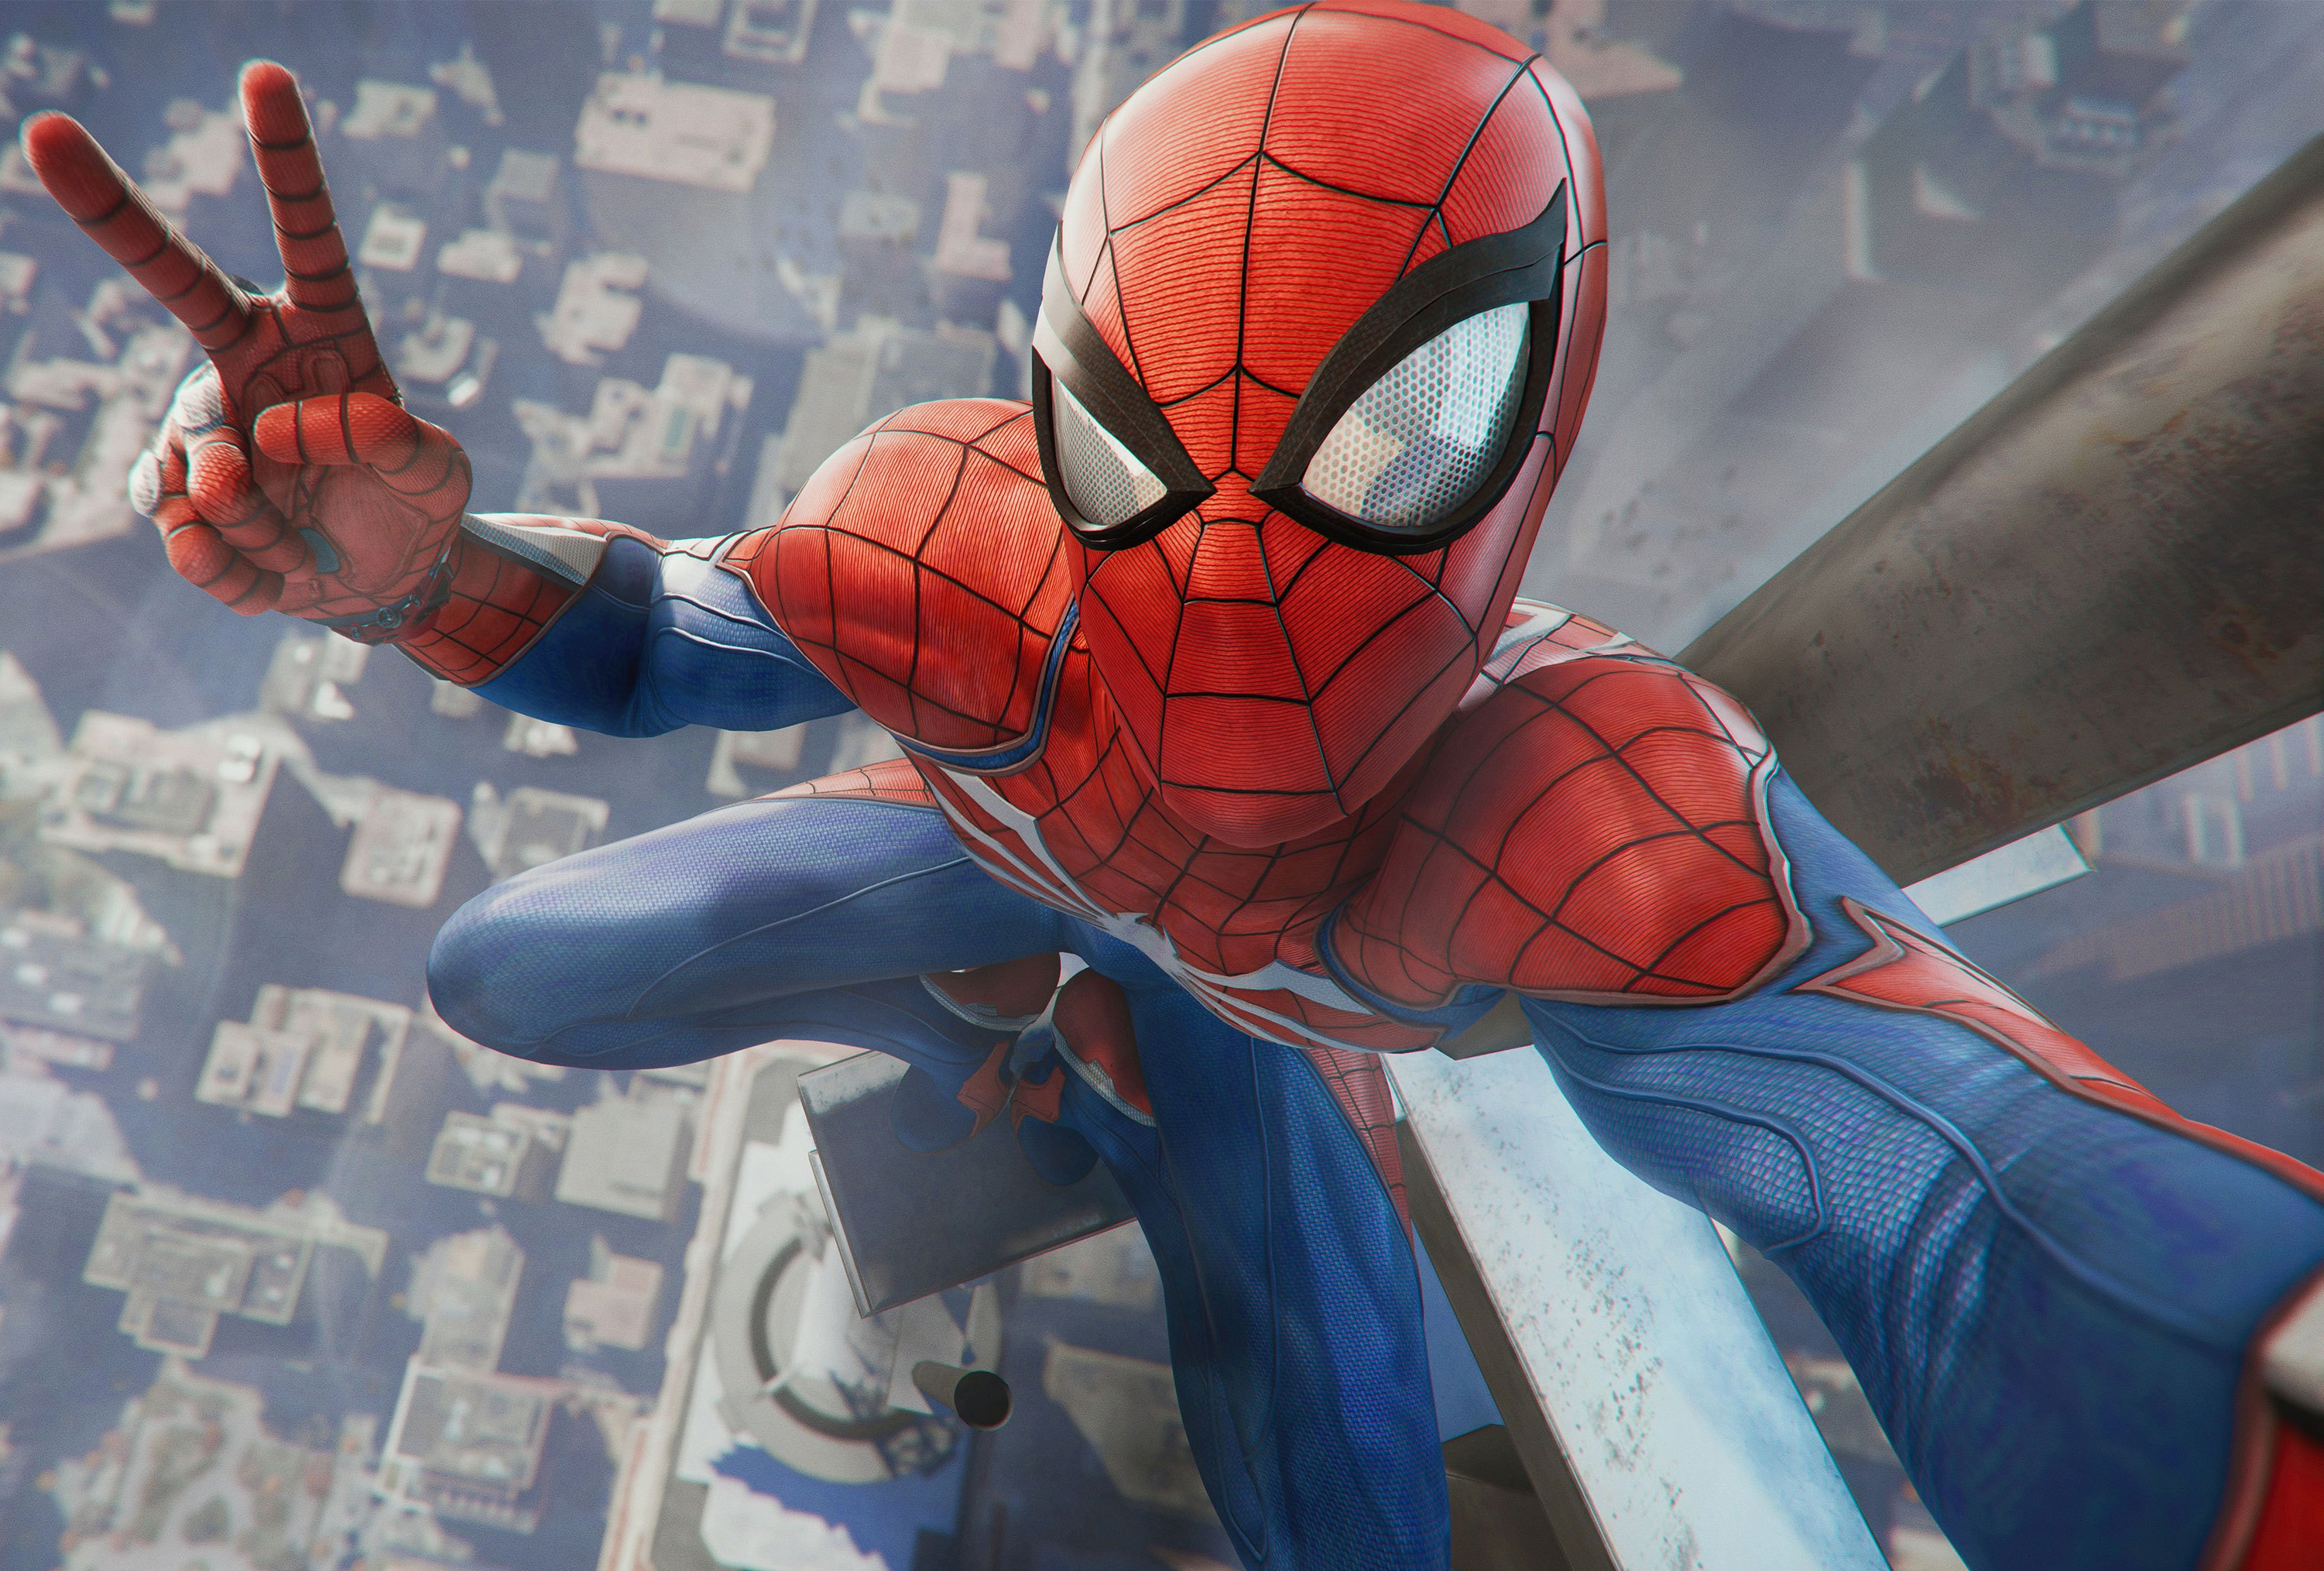 Spider Man PS4 Selfie Photo Mode LEGAL 752723709 1616362779816